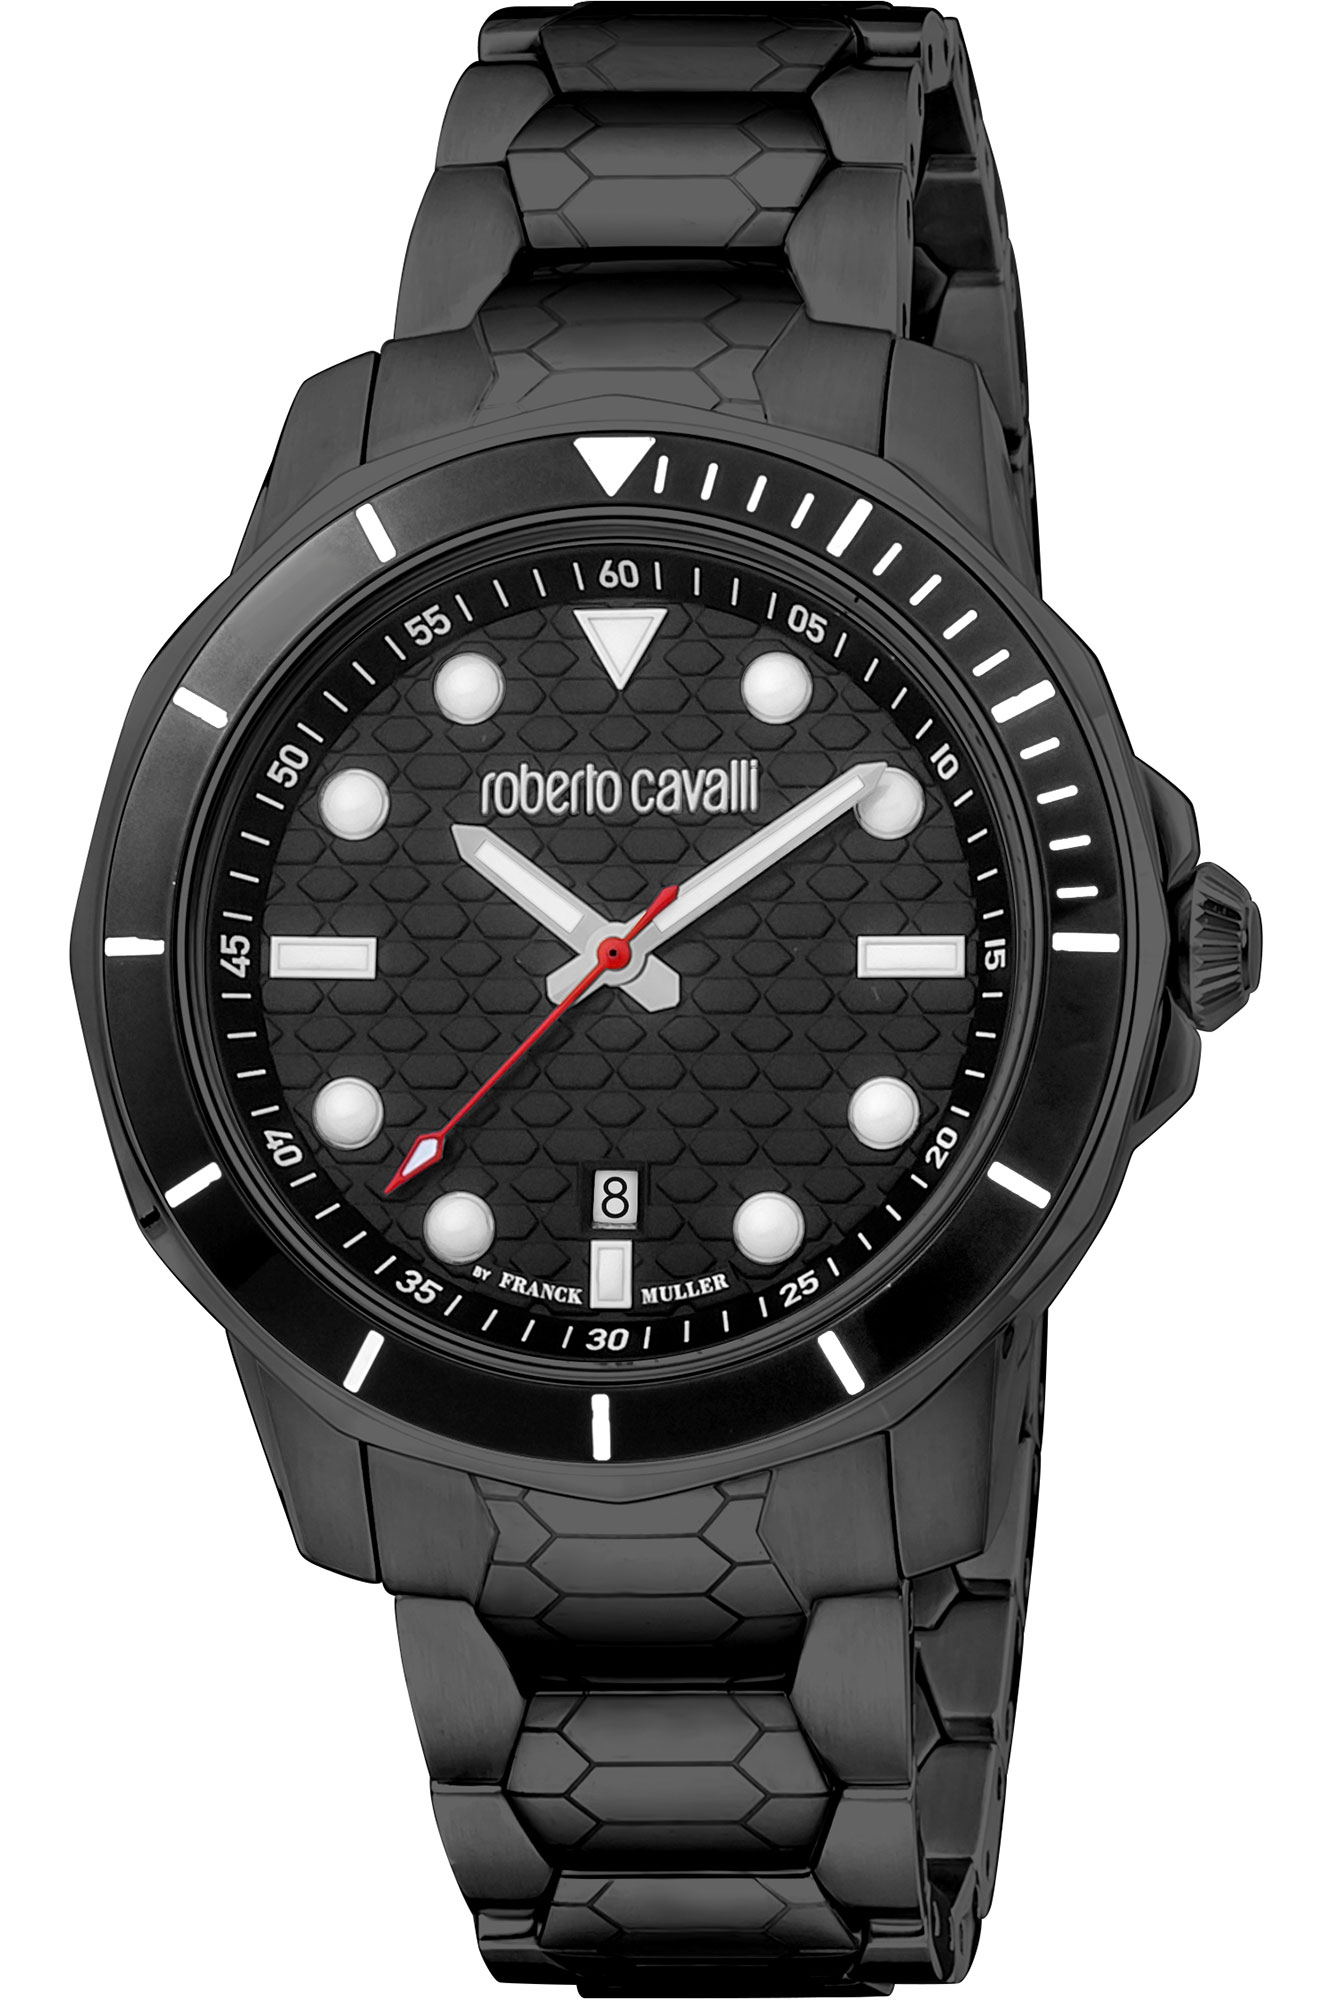 Watch Roberto Cavalli by Franck Muller rv1g159m0071